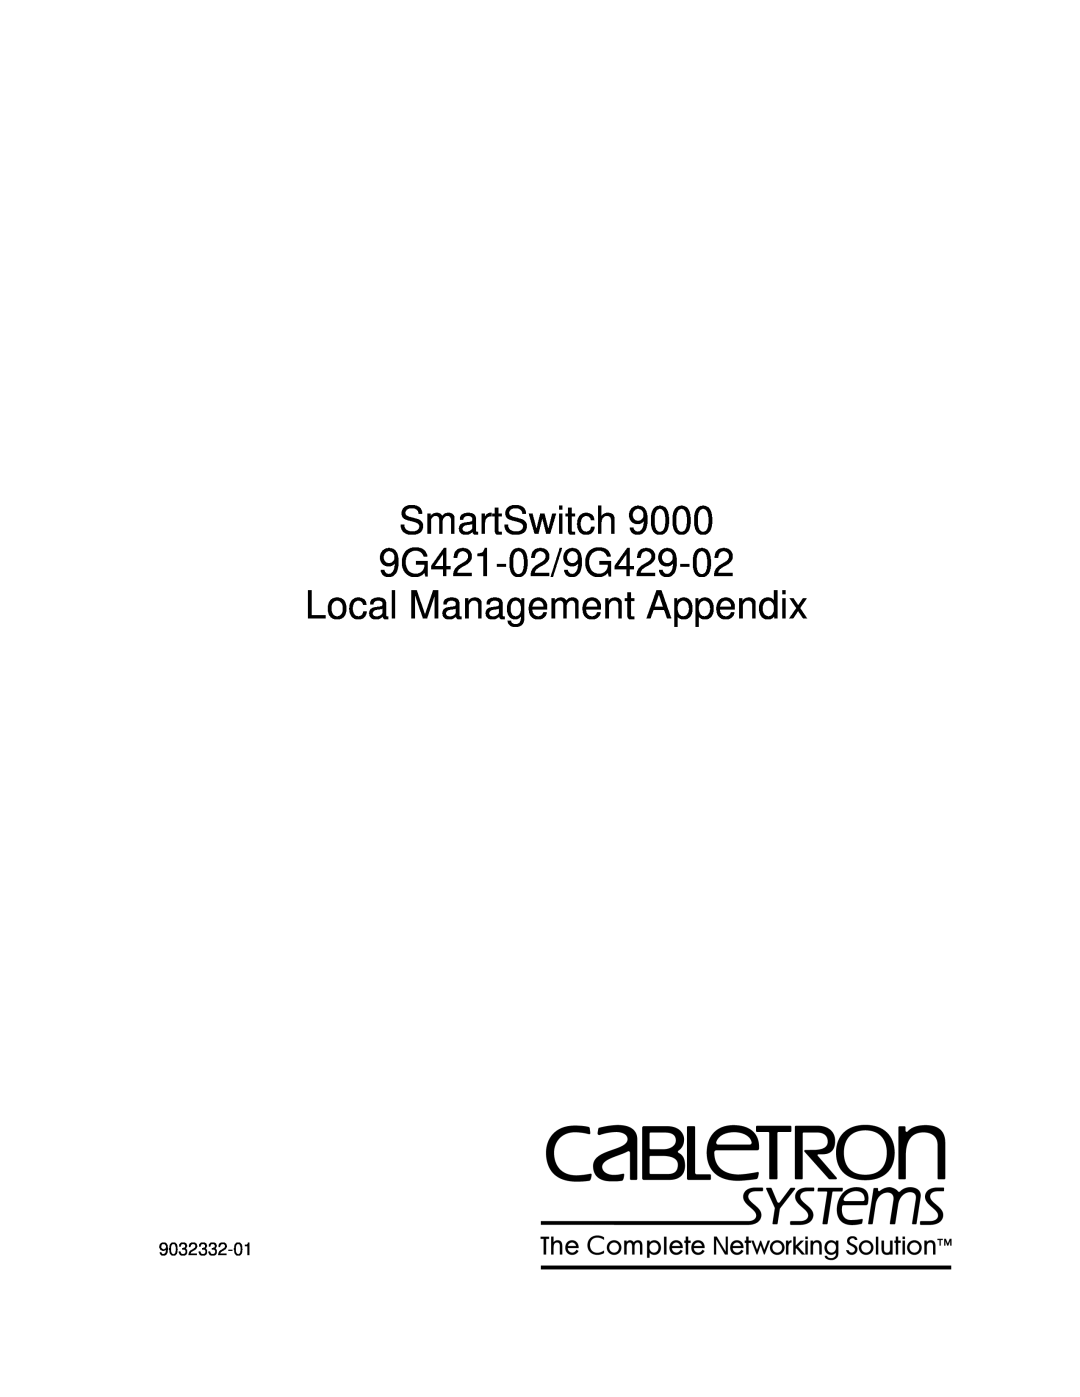 Cabletron Systems appendix SmartSwitch 9G421-02/9G429-02 Local Management Appendix, 9032332-01 